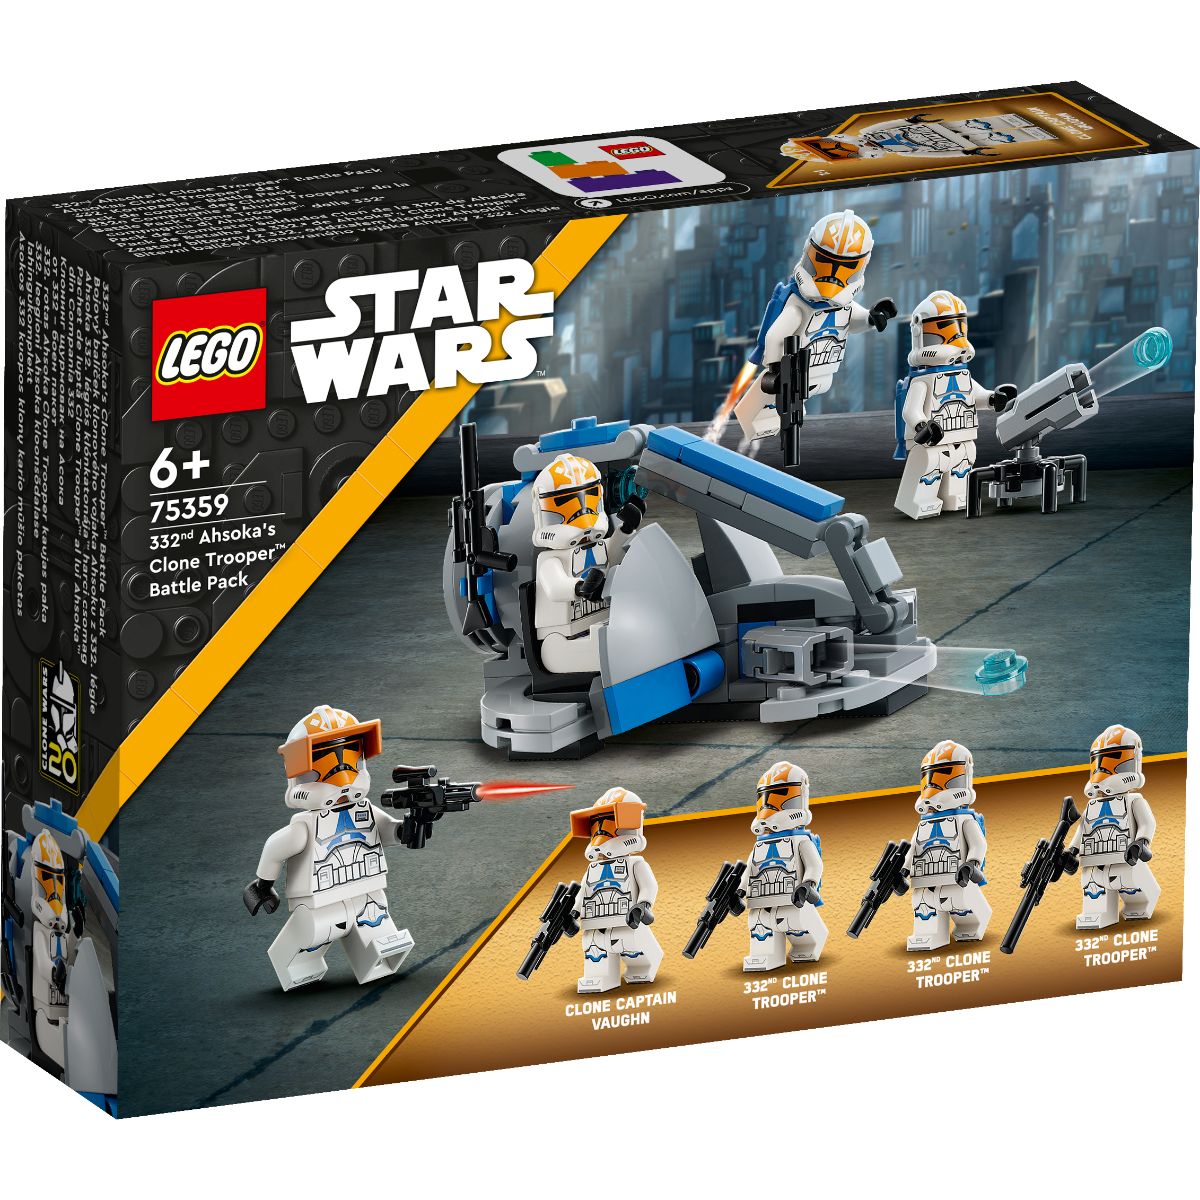 LEGO® Star Wars – Pachet de lupta Clone Trooper™ al lui Ahsoka™ din Compania 332 (75359) LEGO® Star Wars